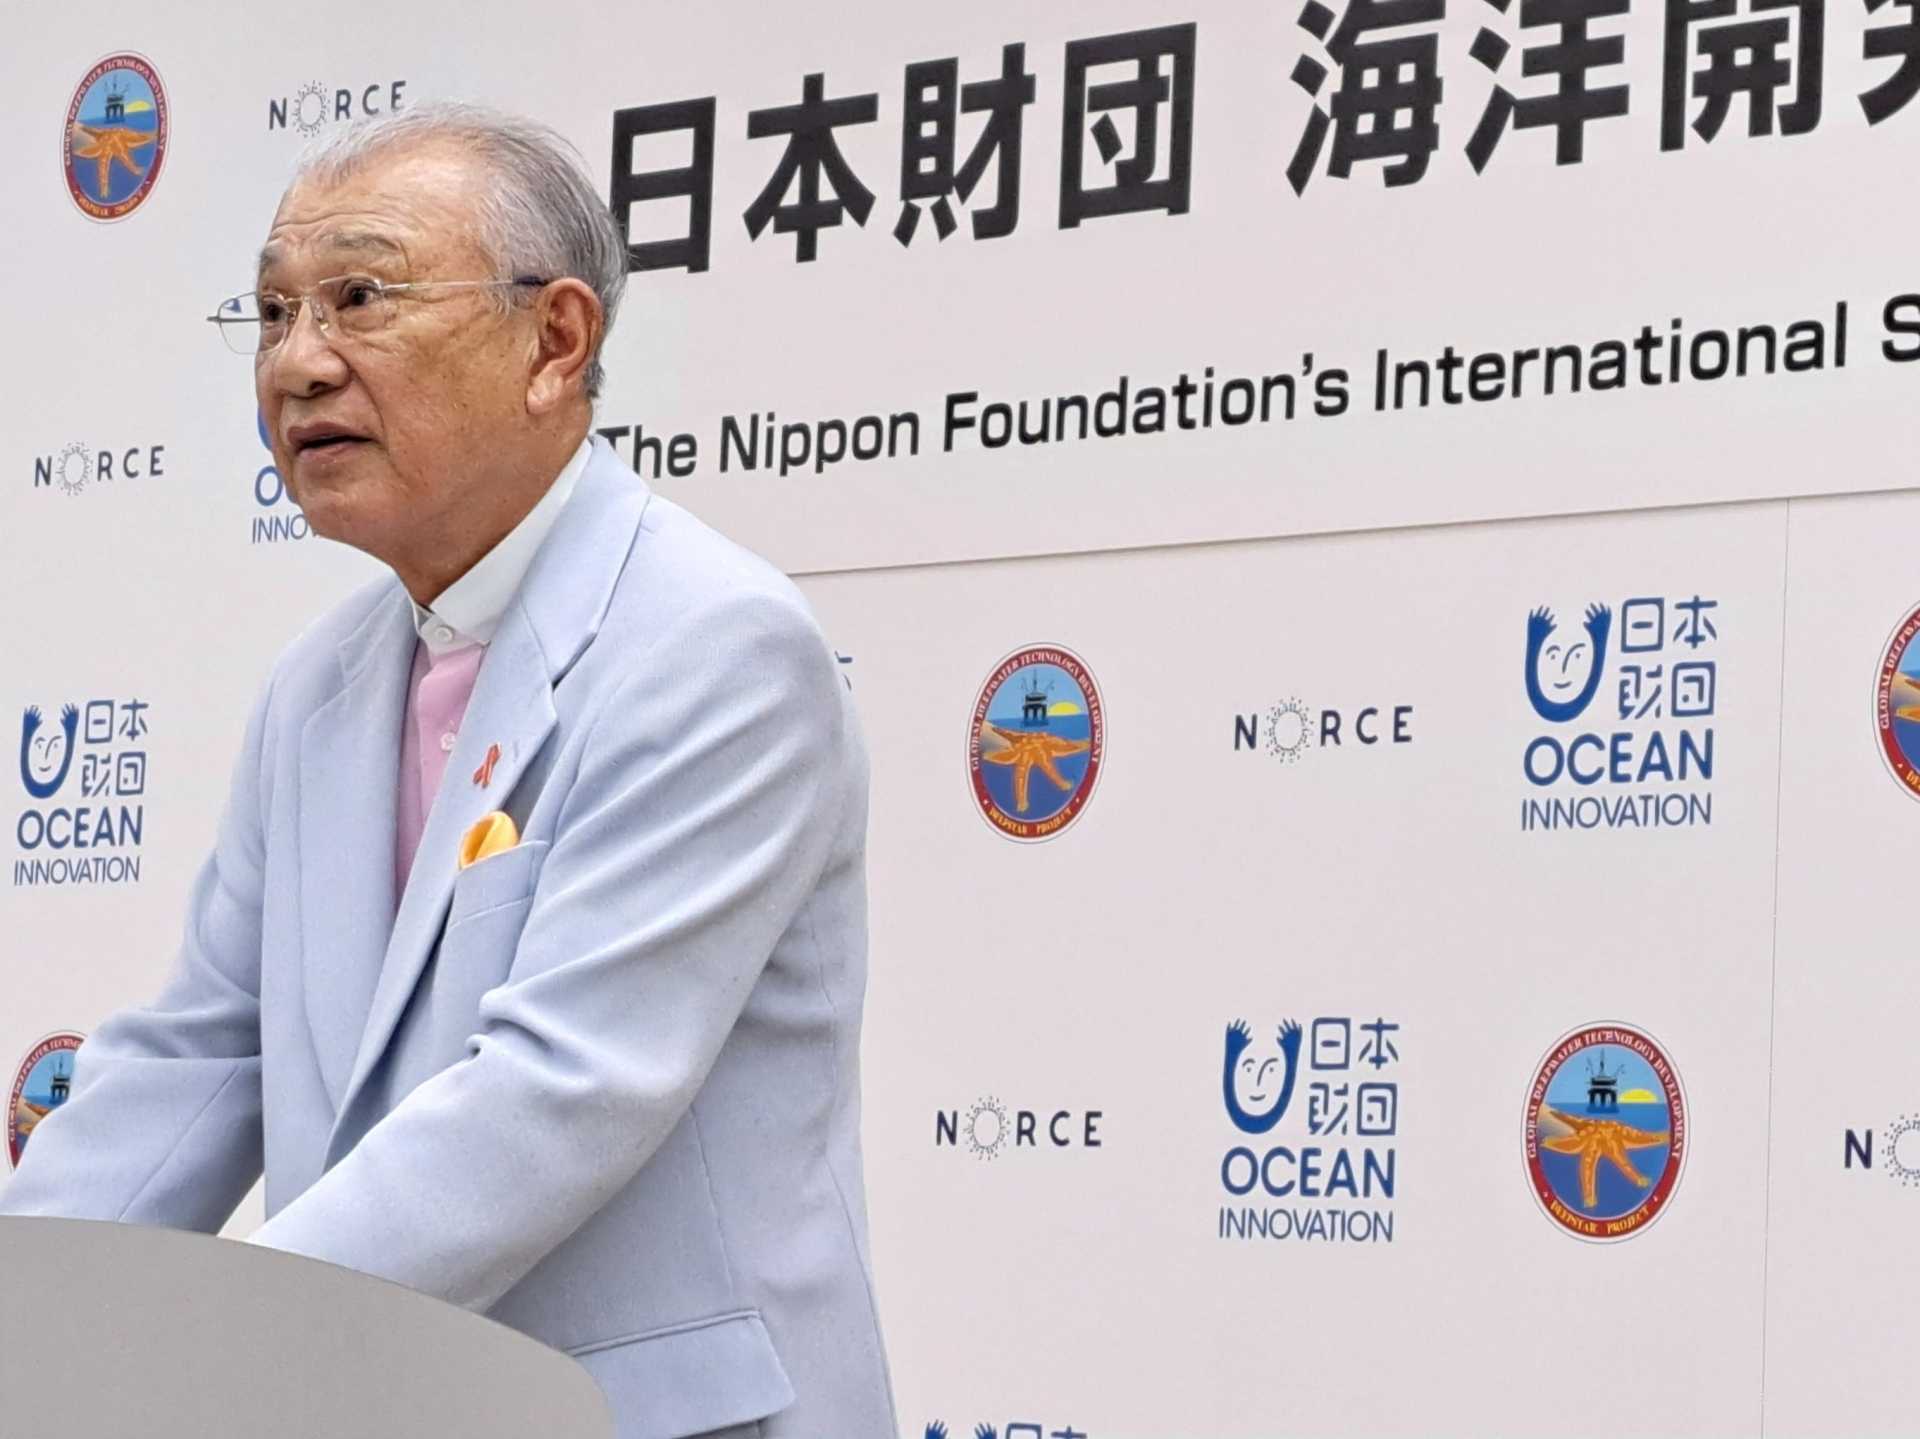 The Nippon Foundation's International Seminar on Offshore Development